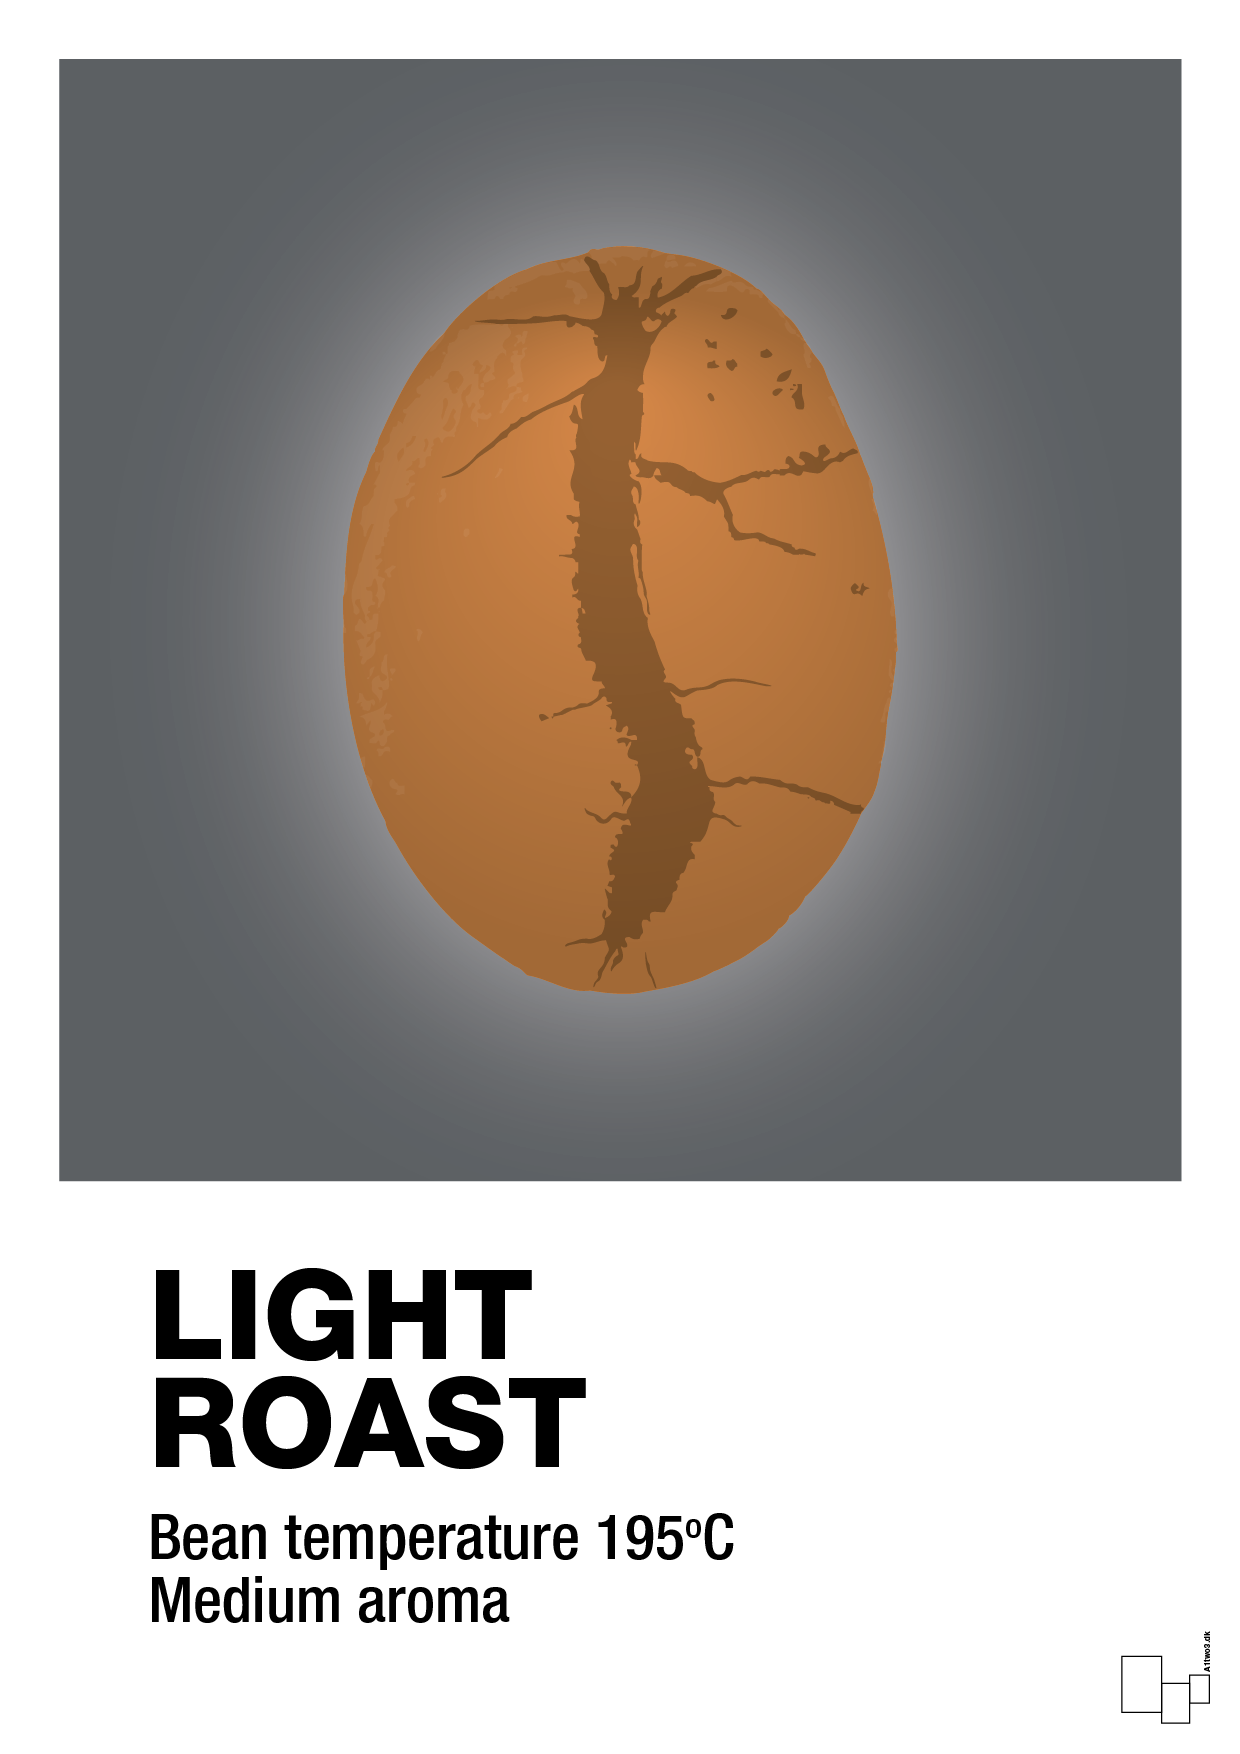 light roast - Plakat med Mad & Drikke i Graphic Charcoal